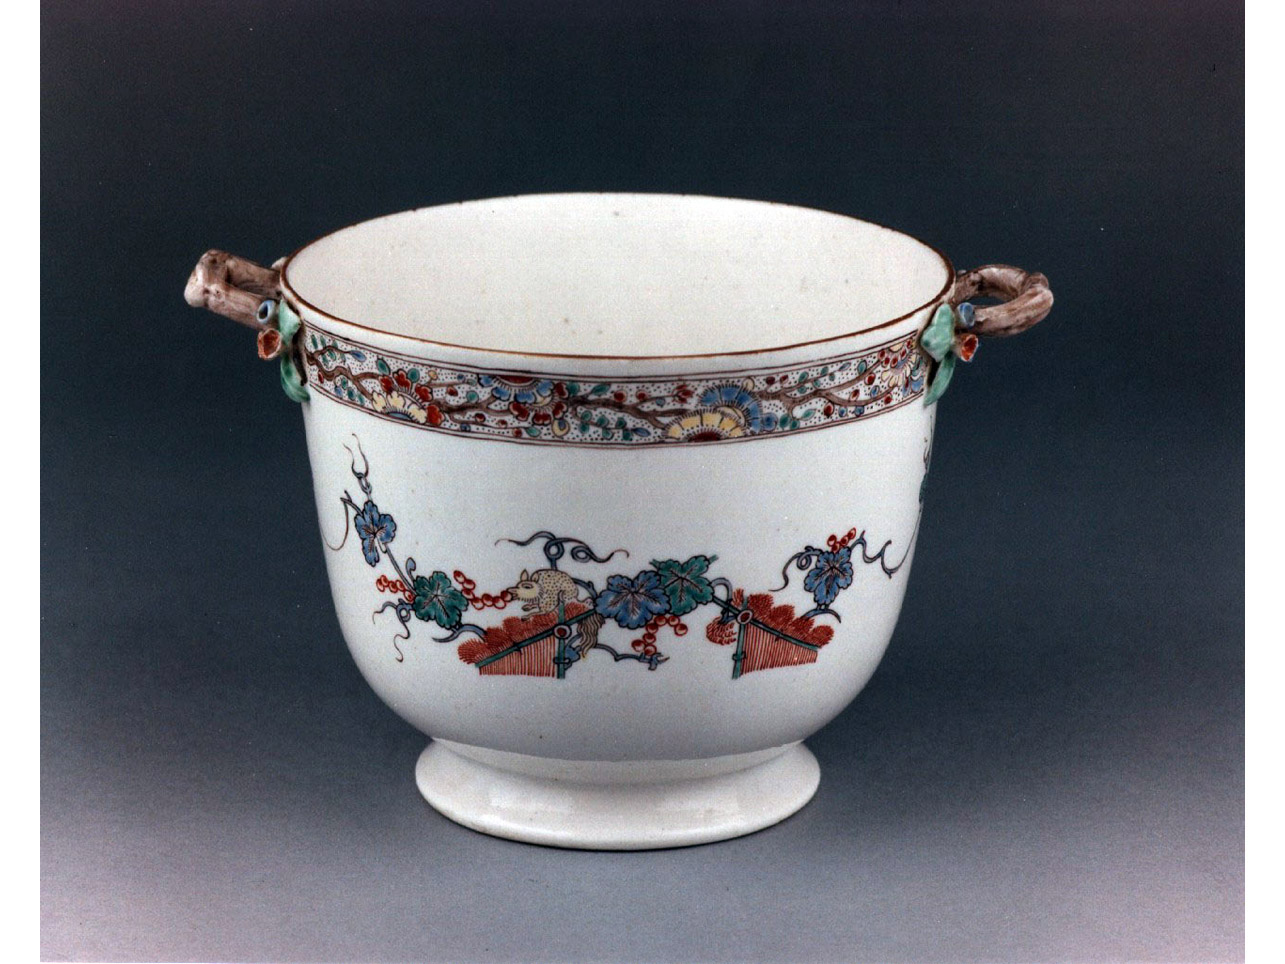 motivi decorativi floreali (cachepot) - produzione di Chantilly (sec. XVIII)